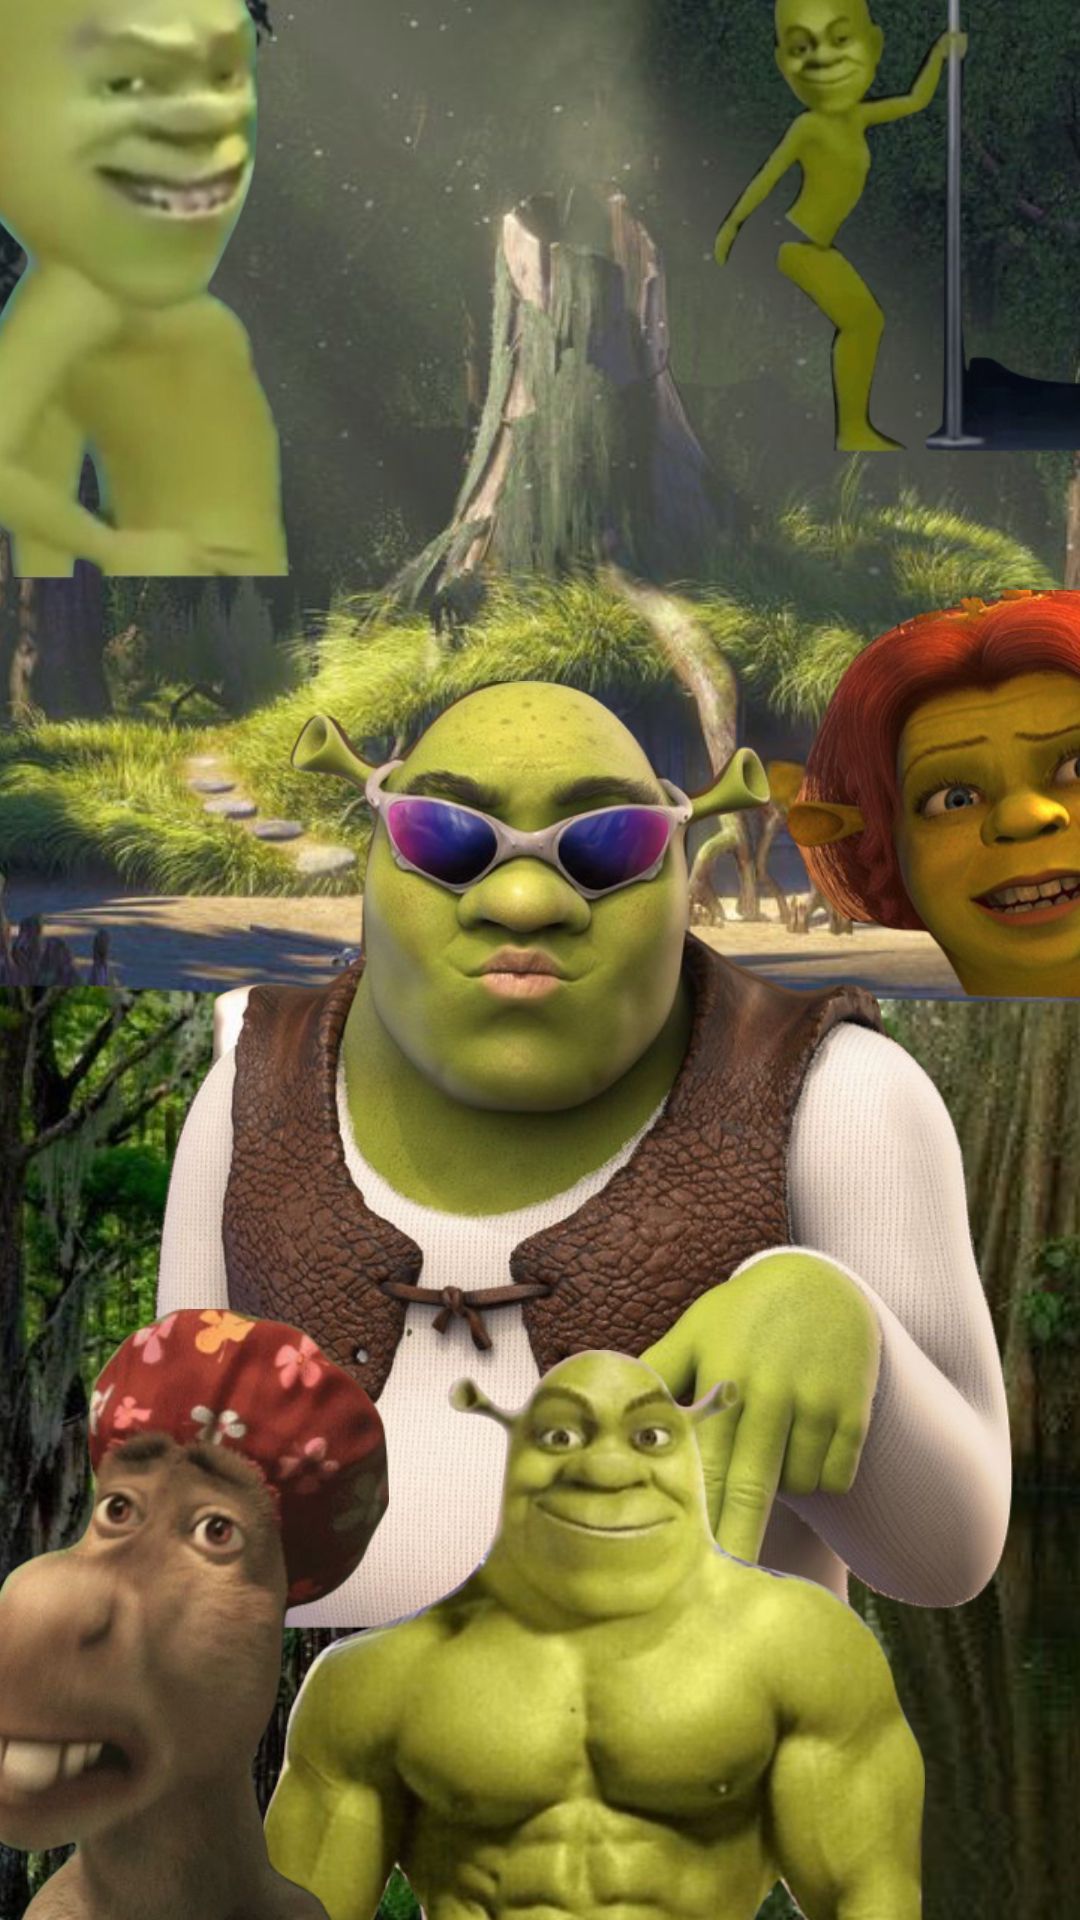 Shrek, weird image, Shrek funny. Do not mention downloads or free downloads - Shrek